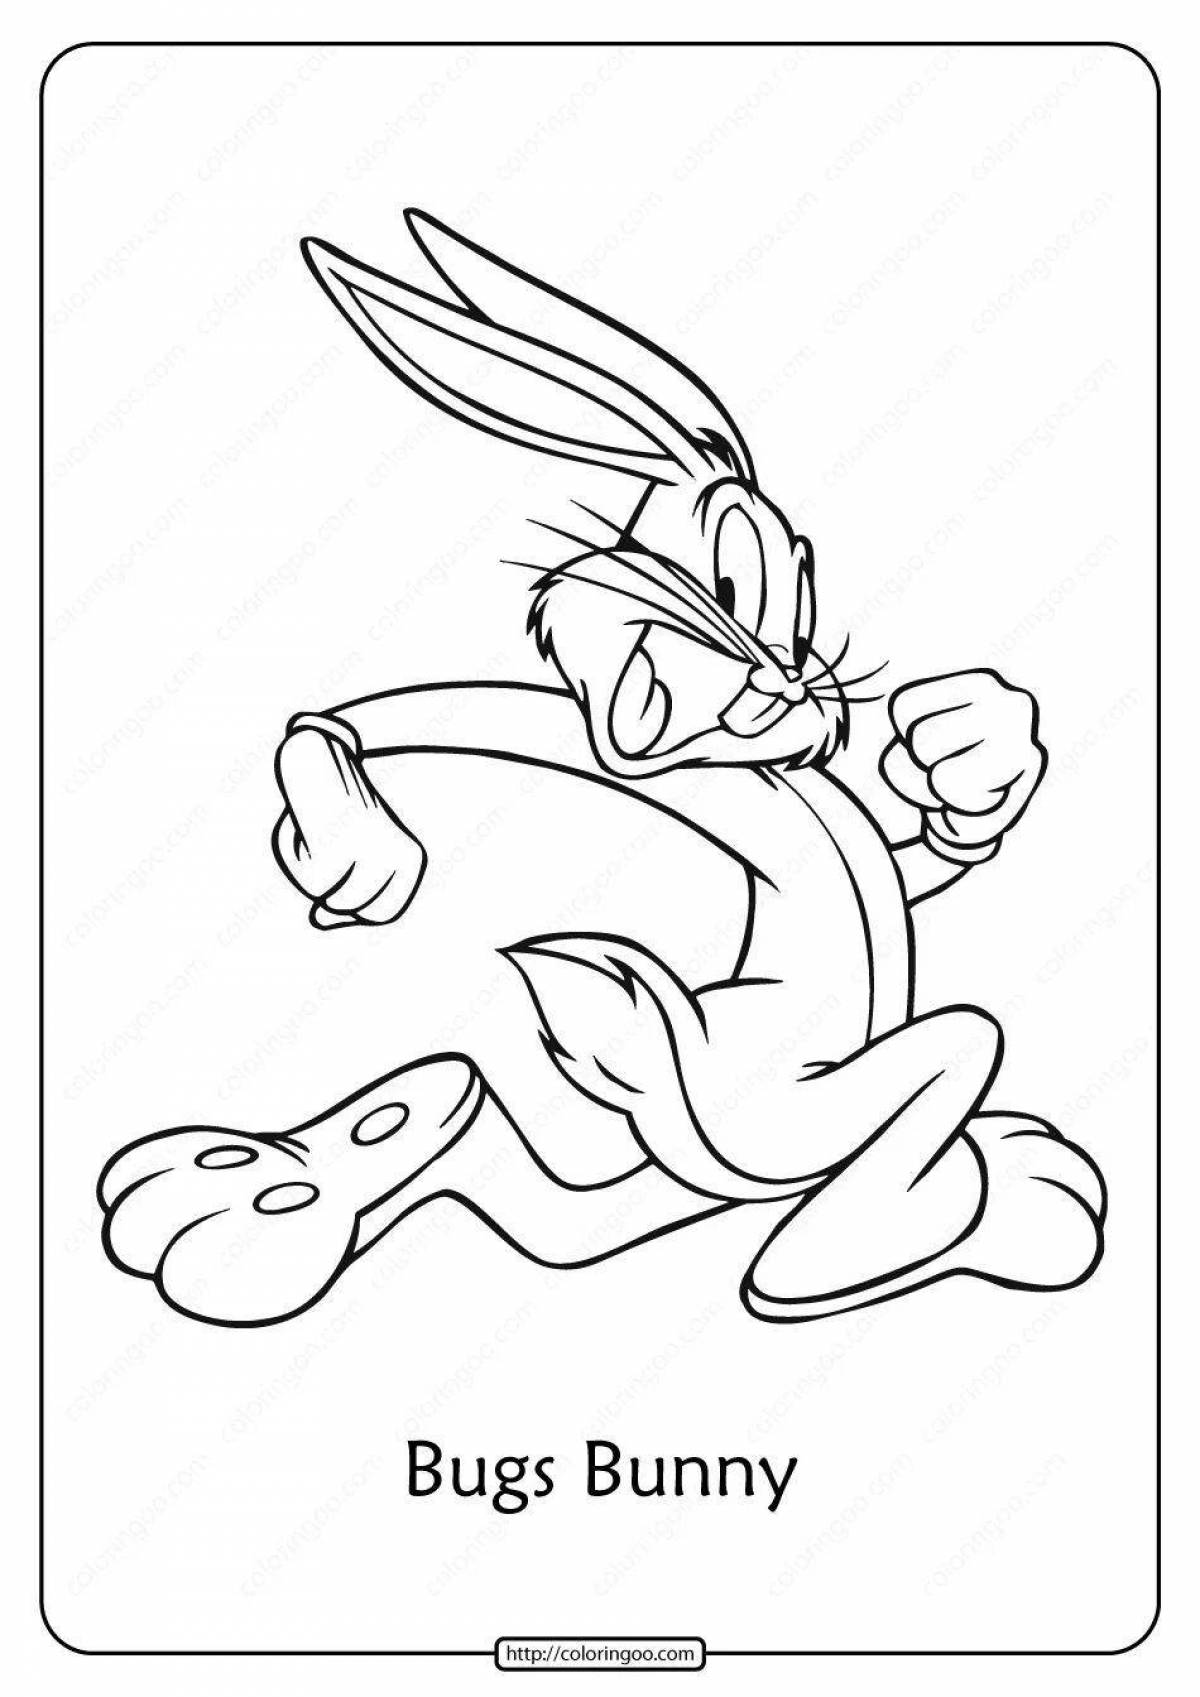 Roger Rabbit fun coloring book